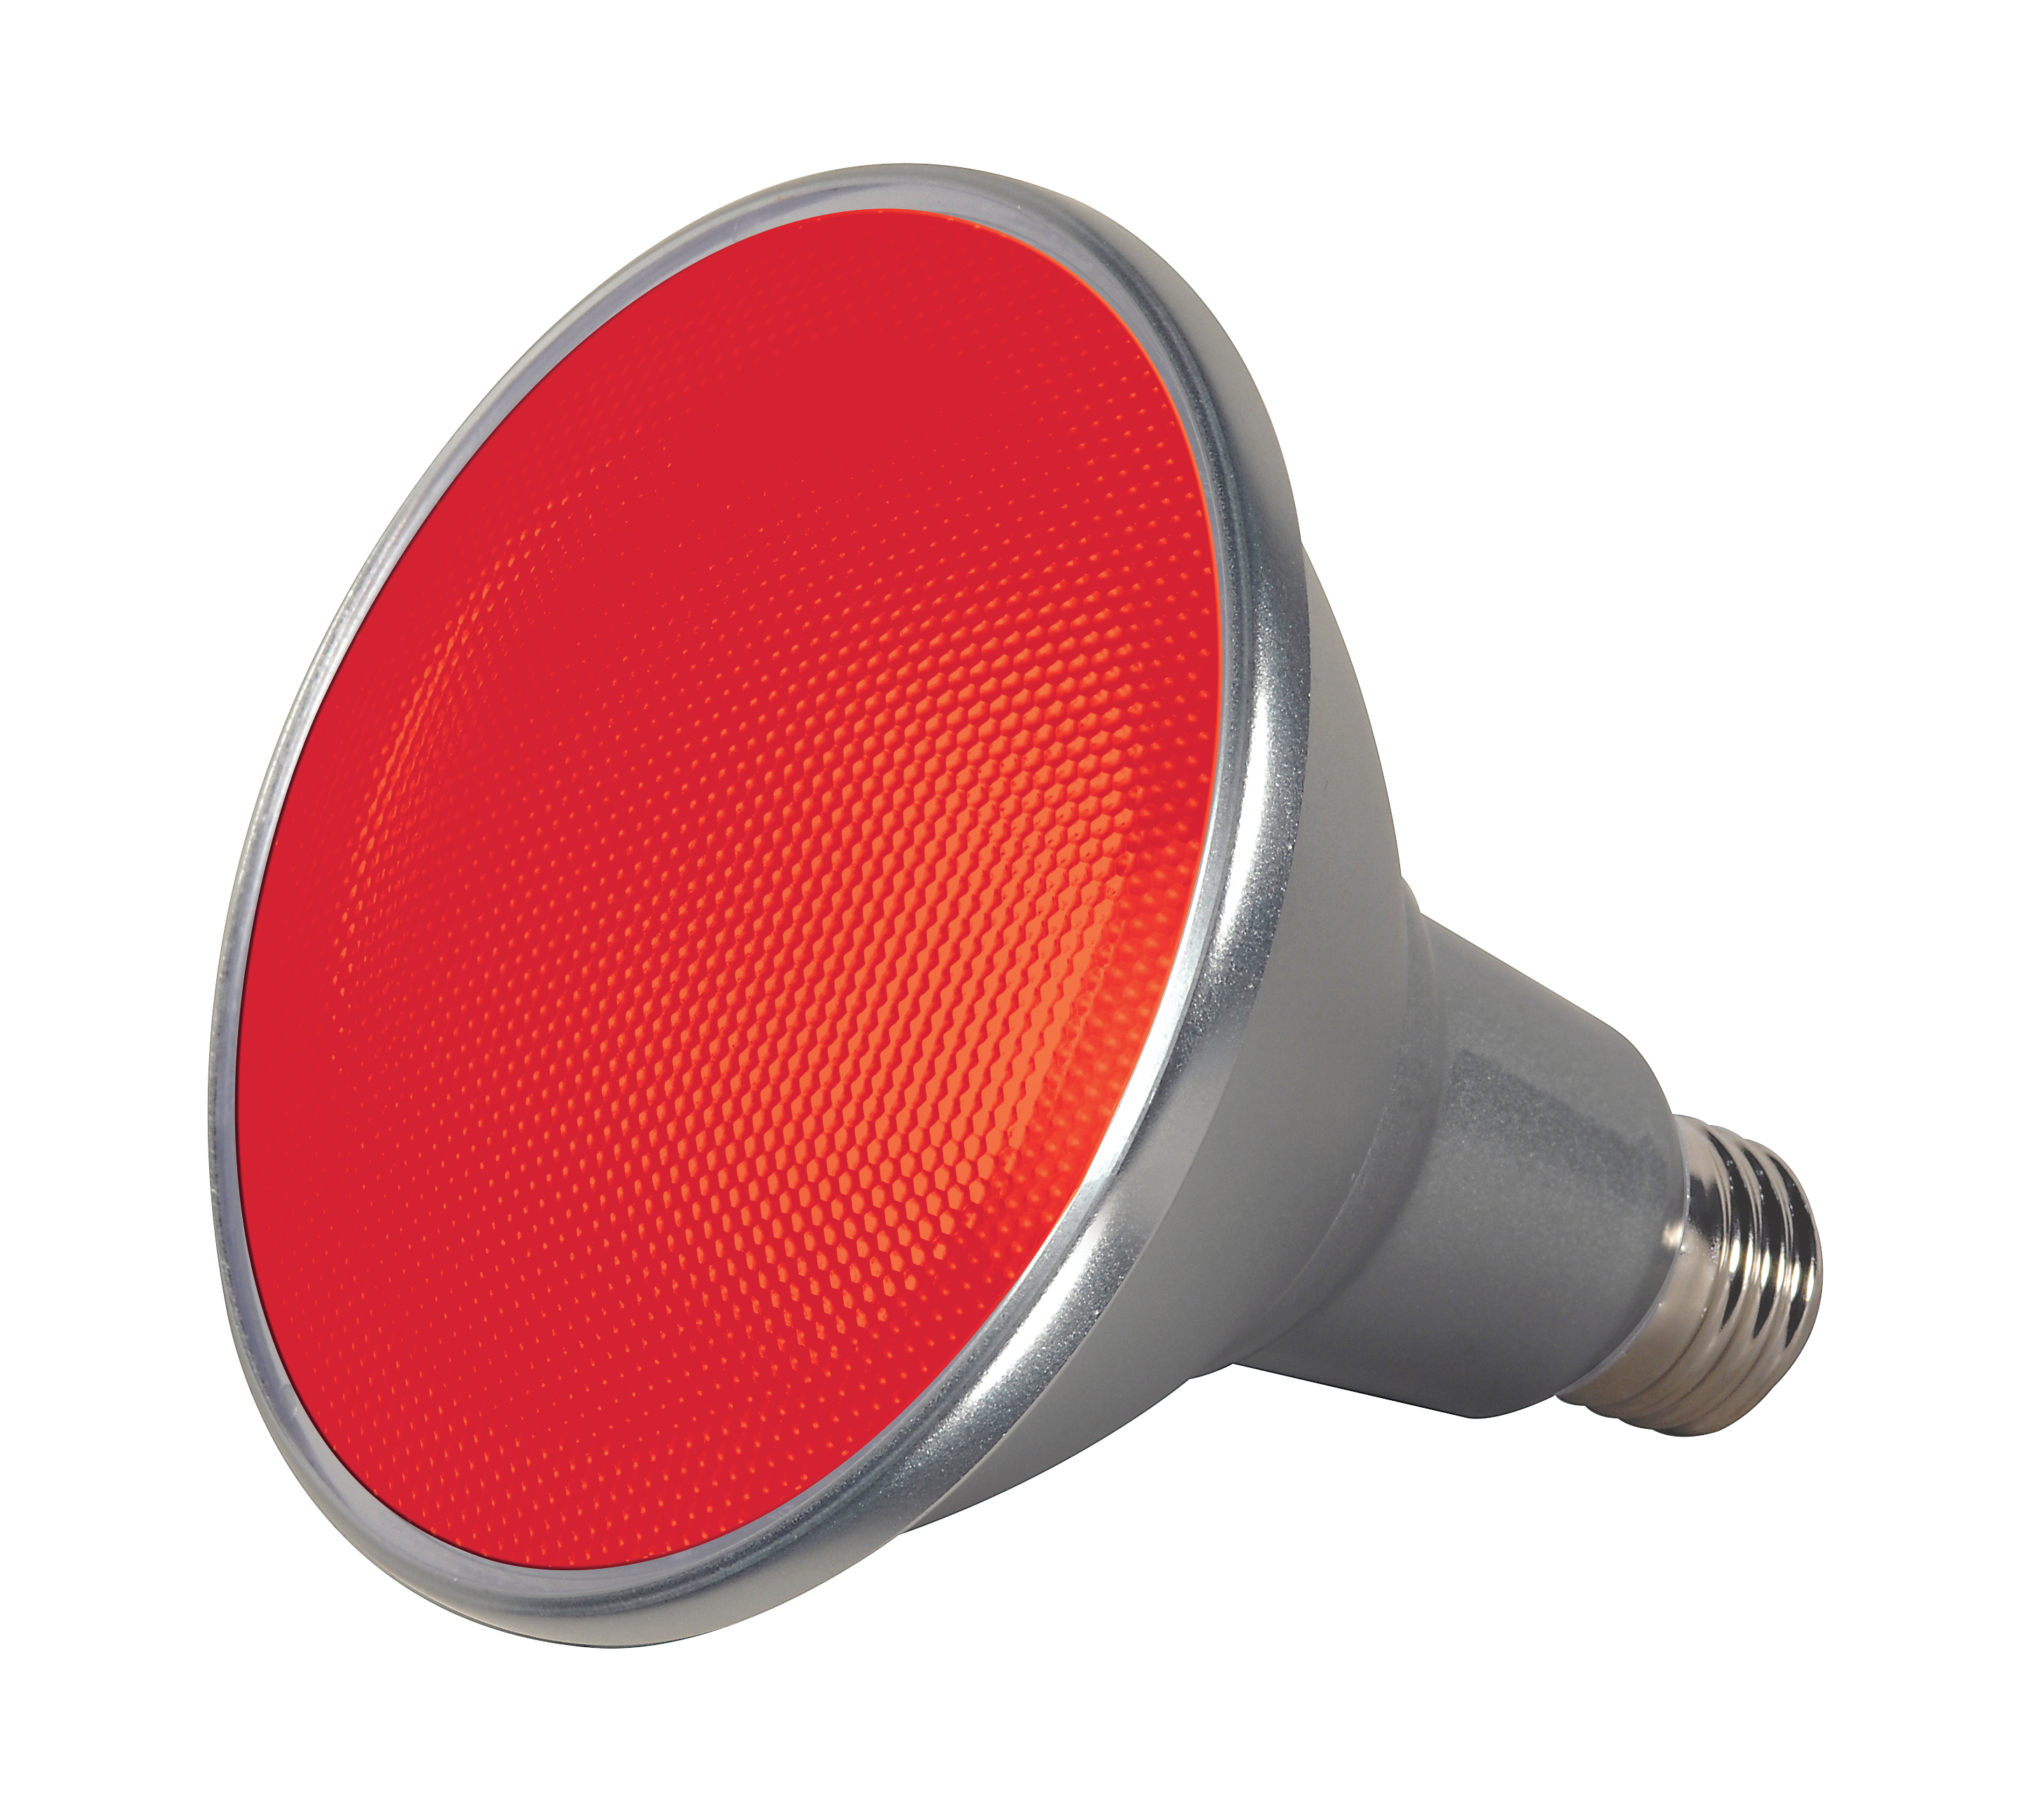 PAR LED, Designation: 15W PAR38 LED - 40' Beam Spread - Medium Base - 120V - Red